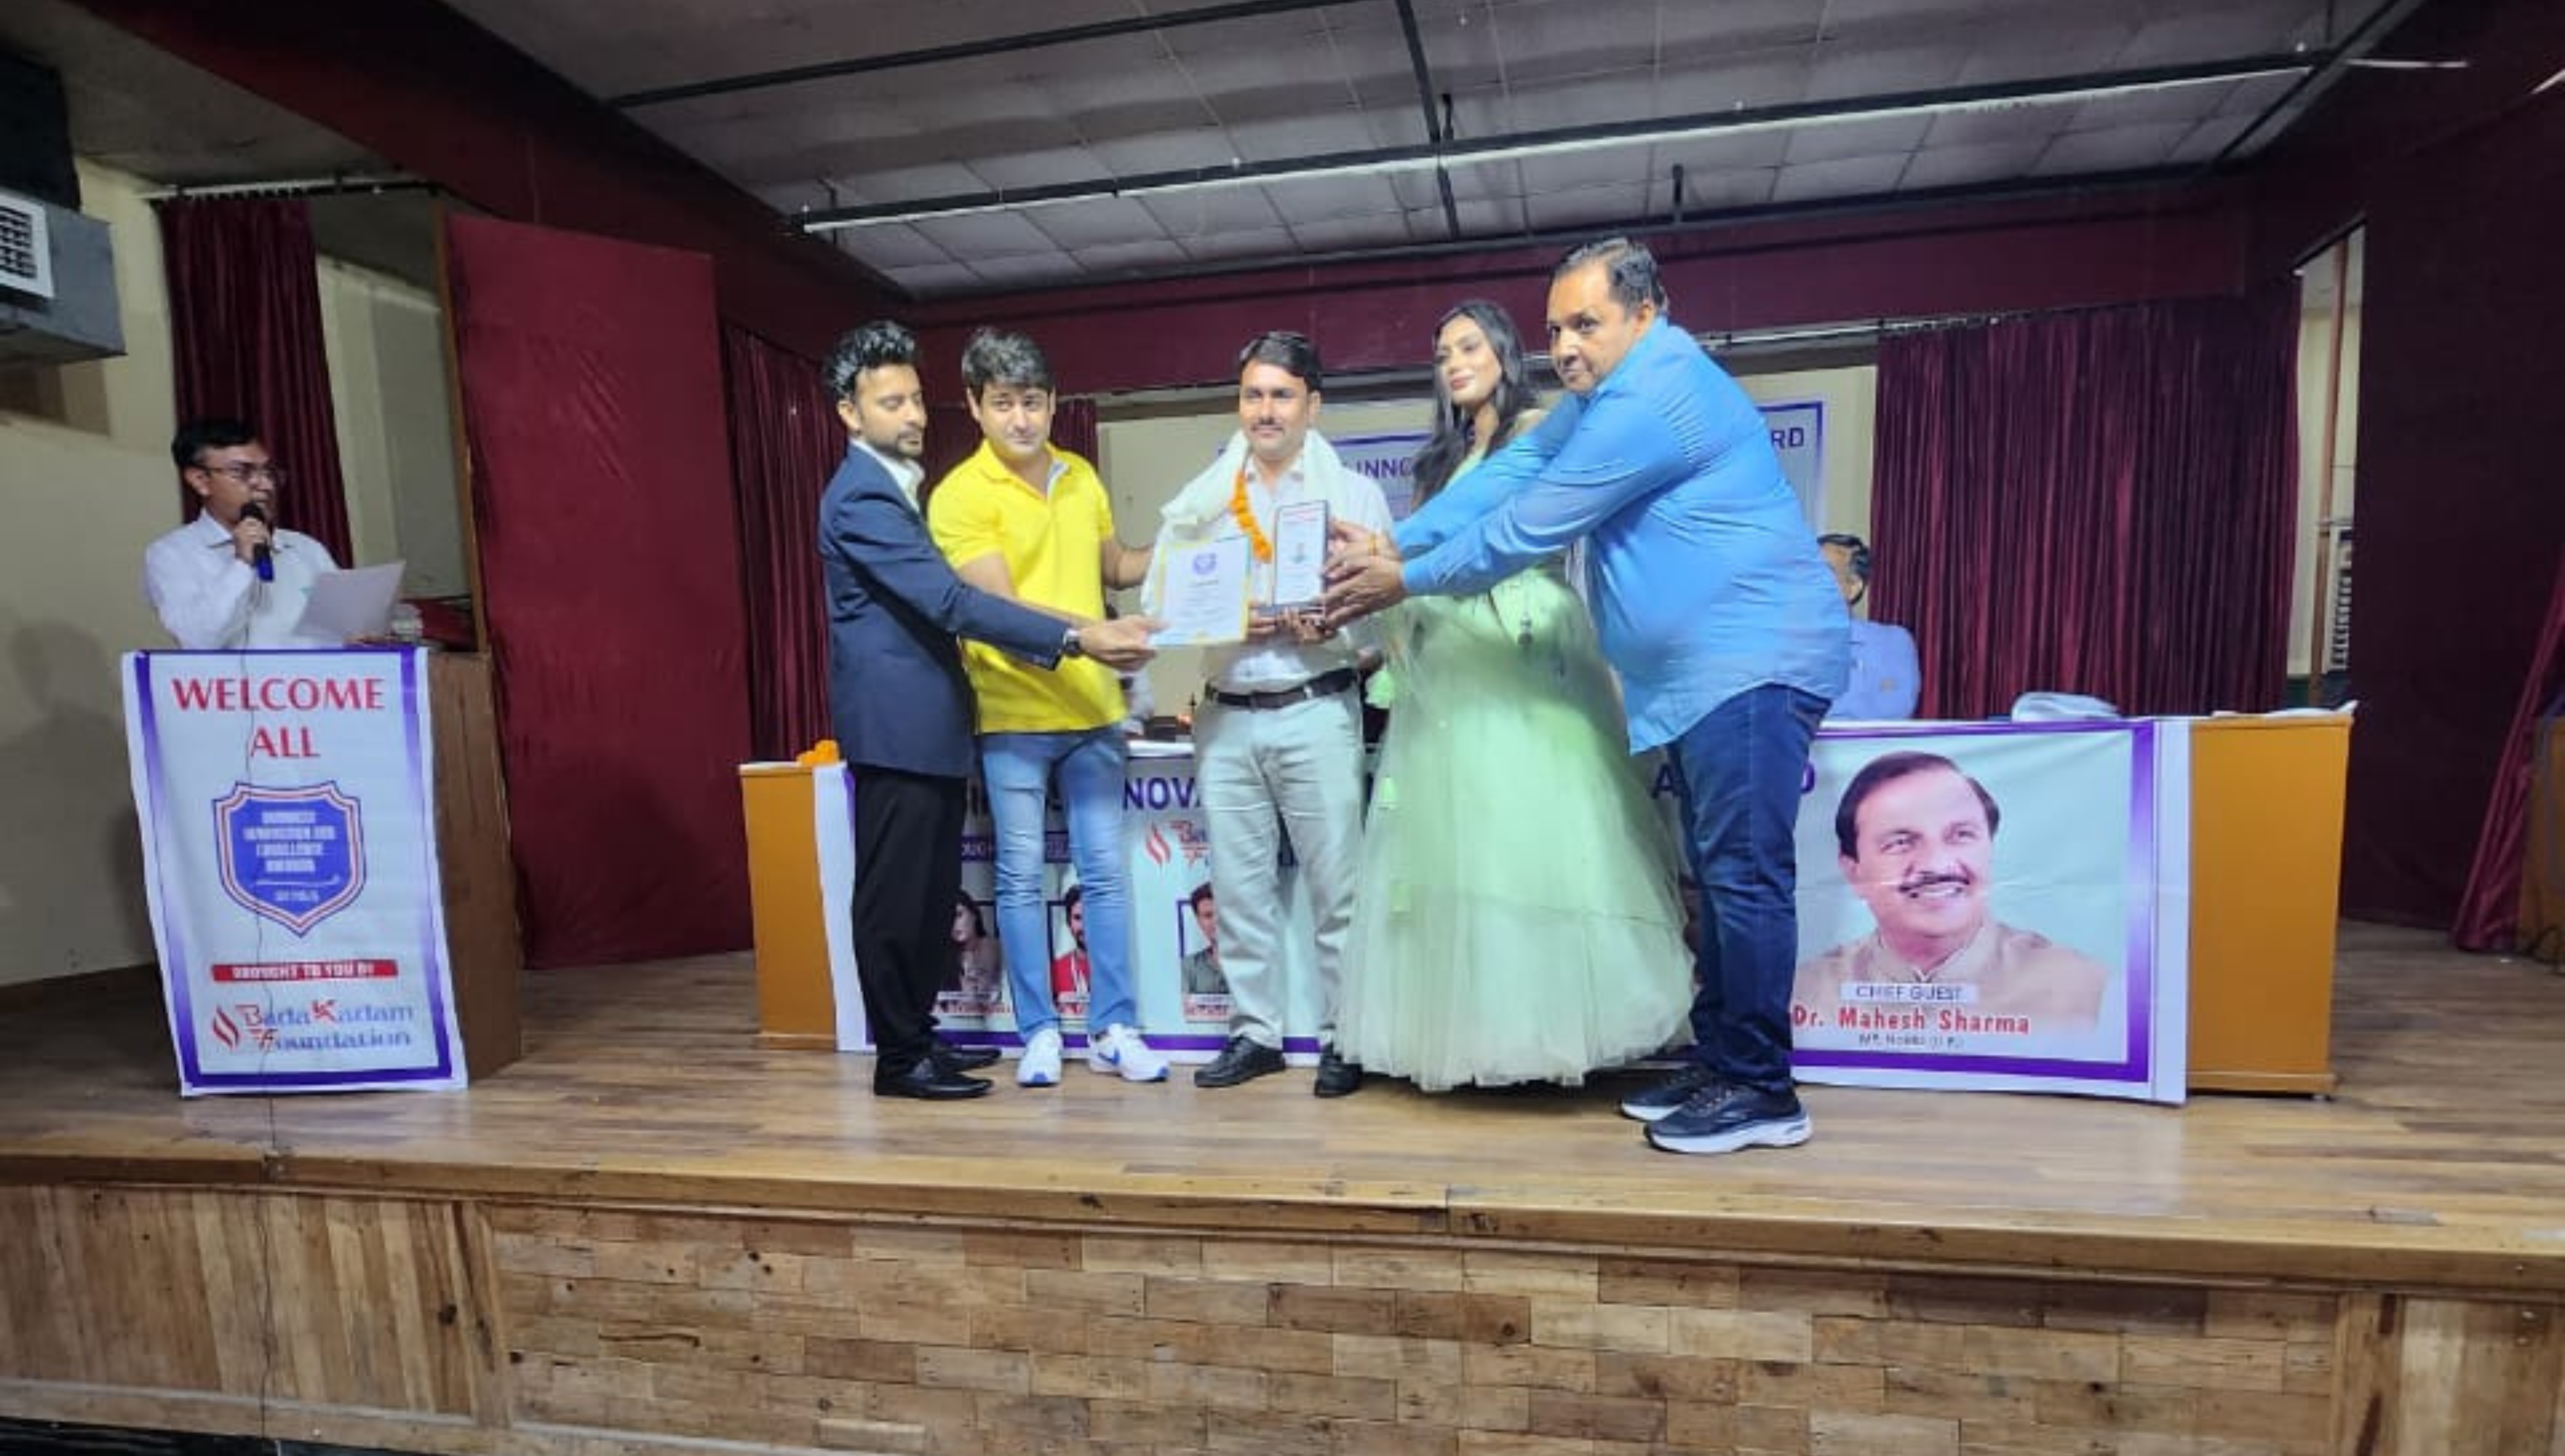 Ravinder Sharma being Awarded